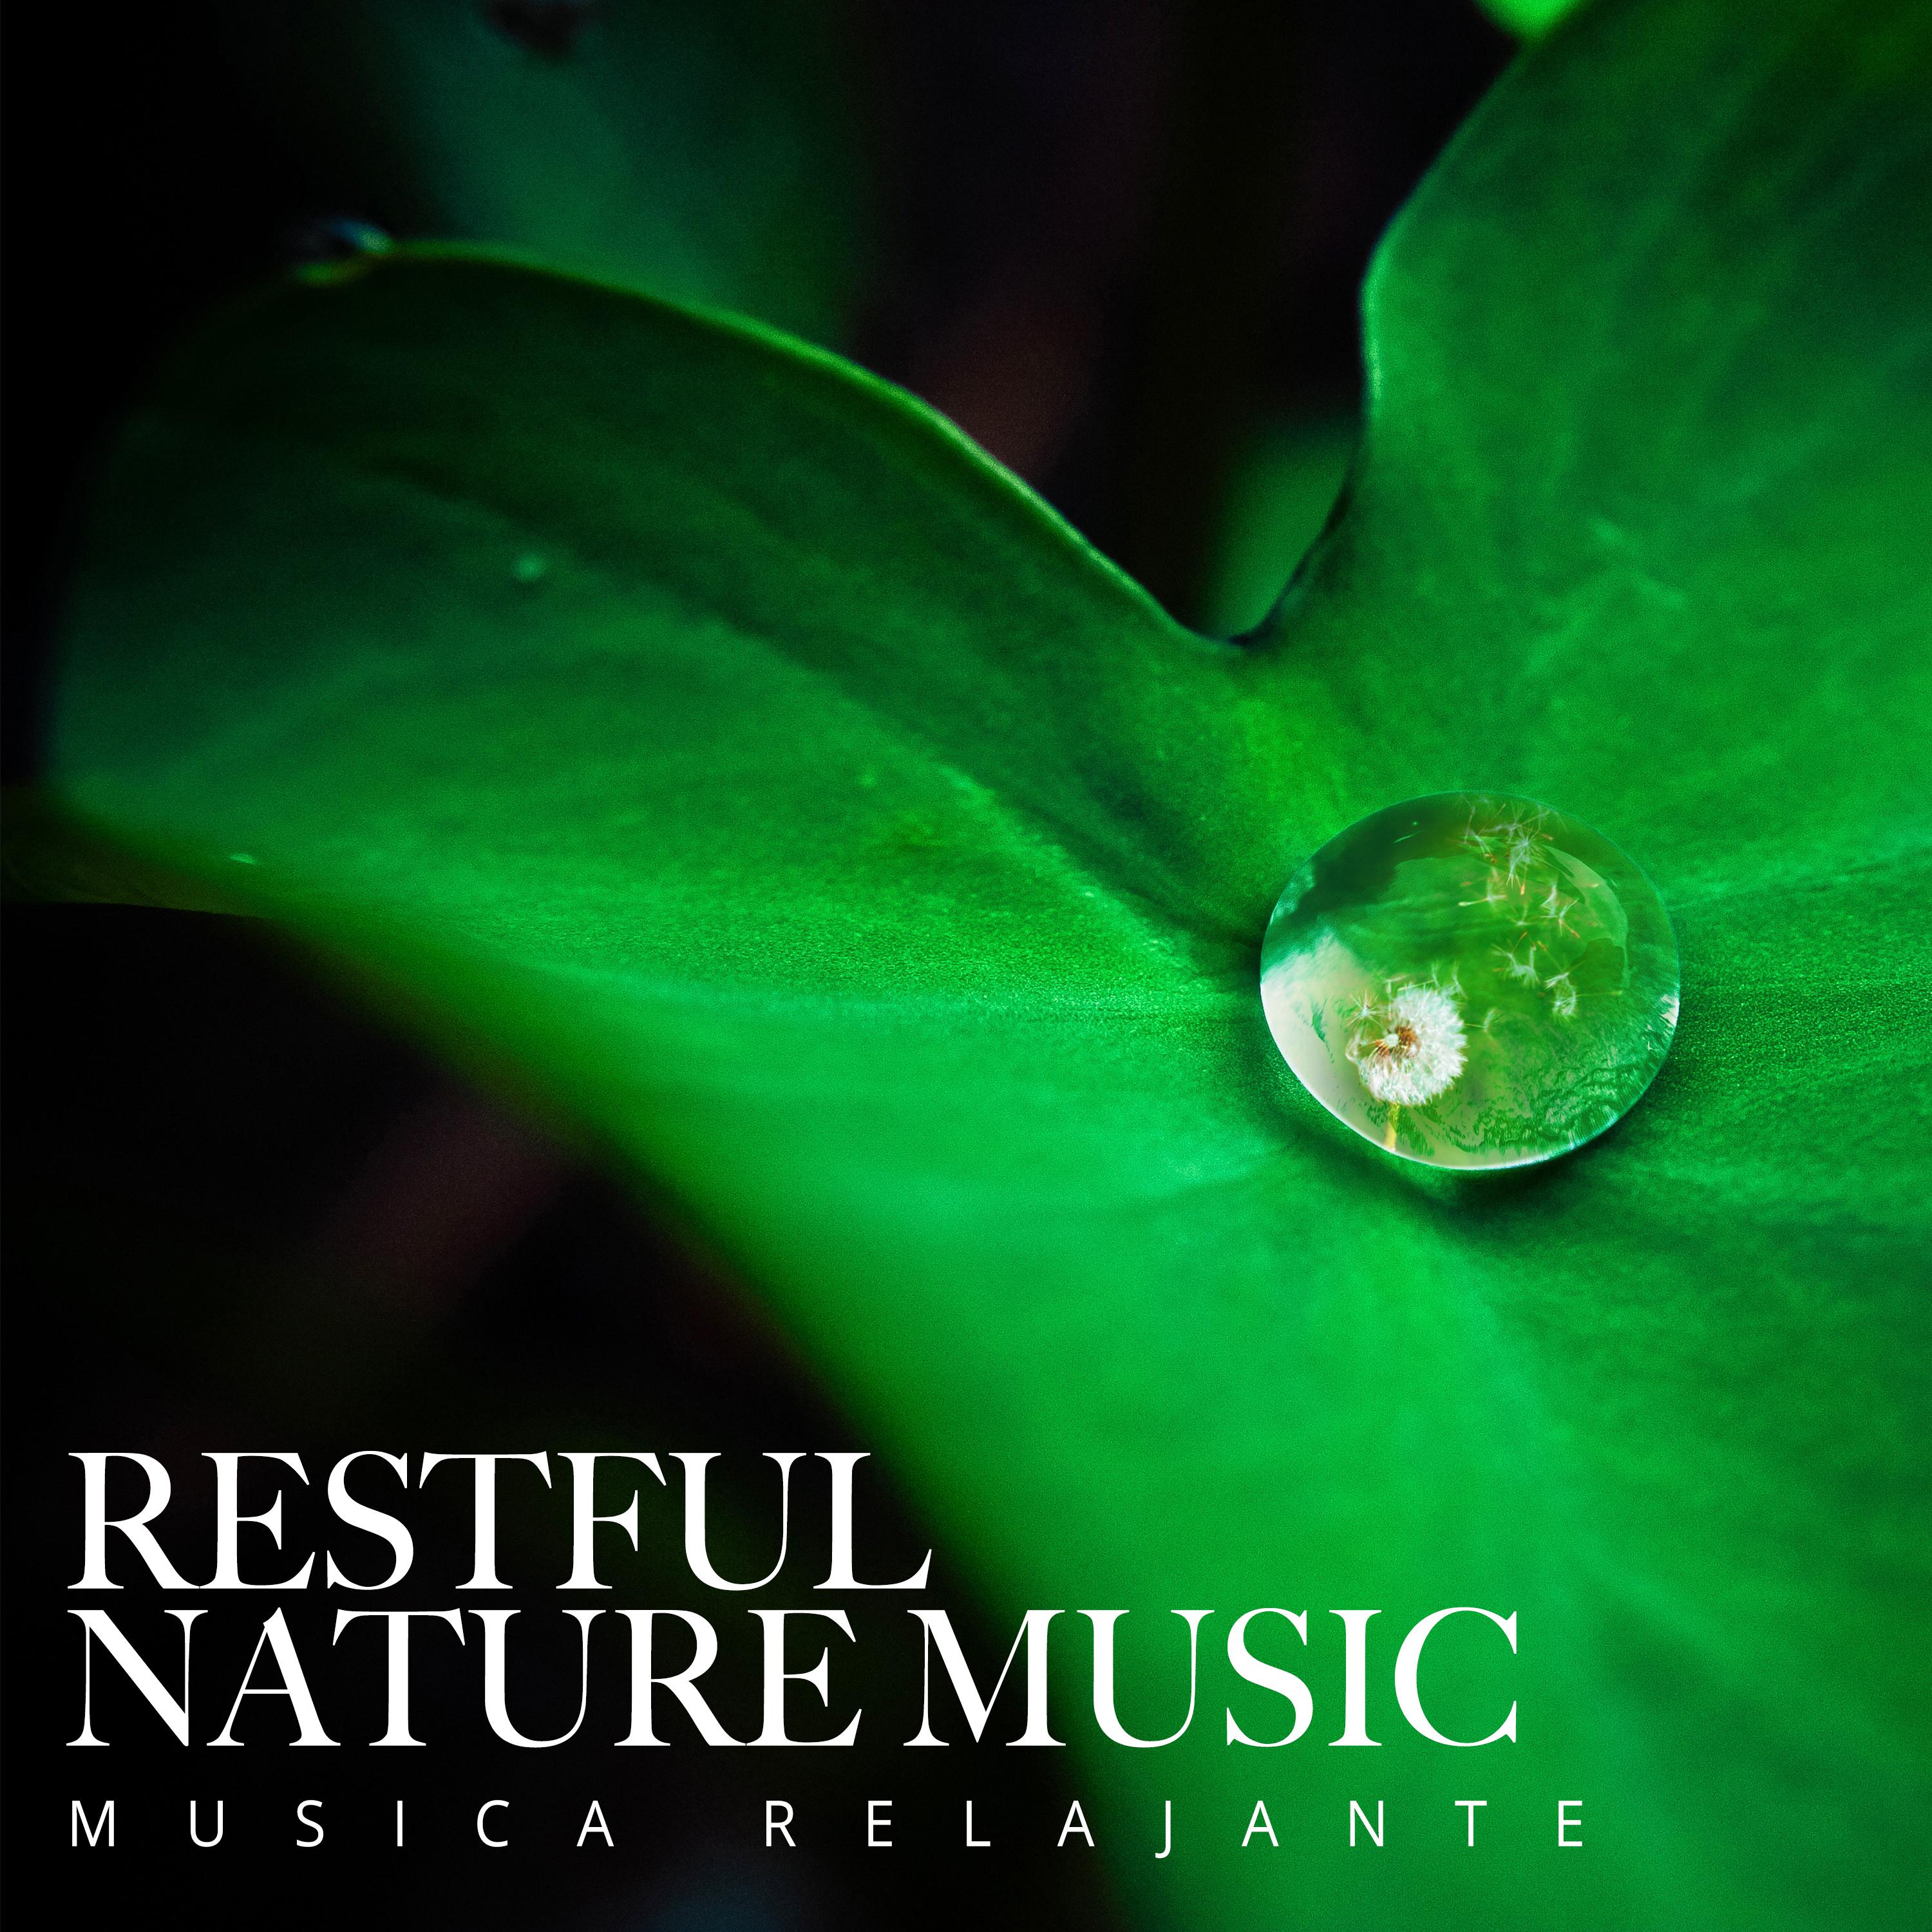 Restful Nature Music